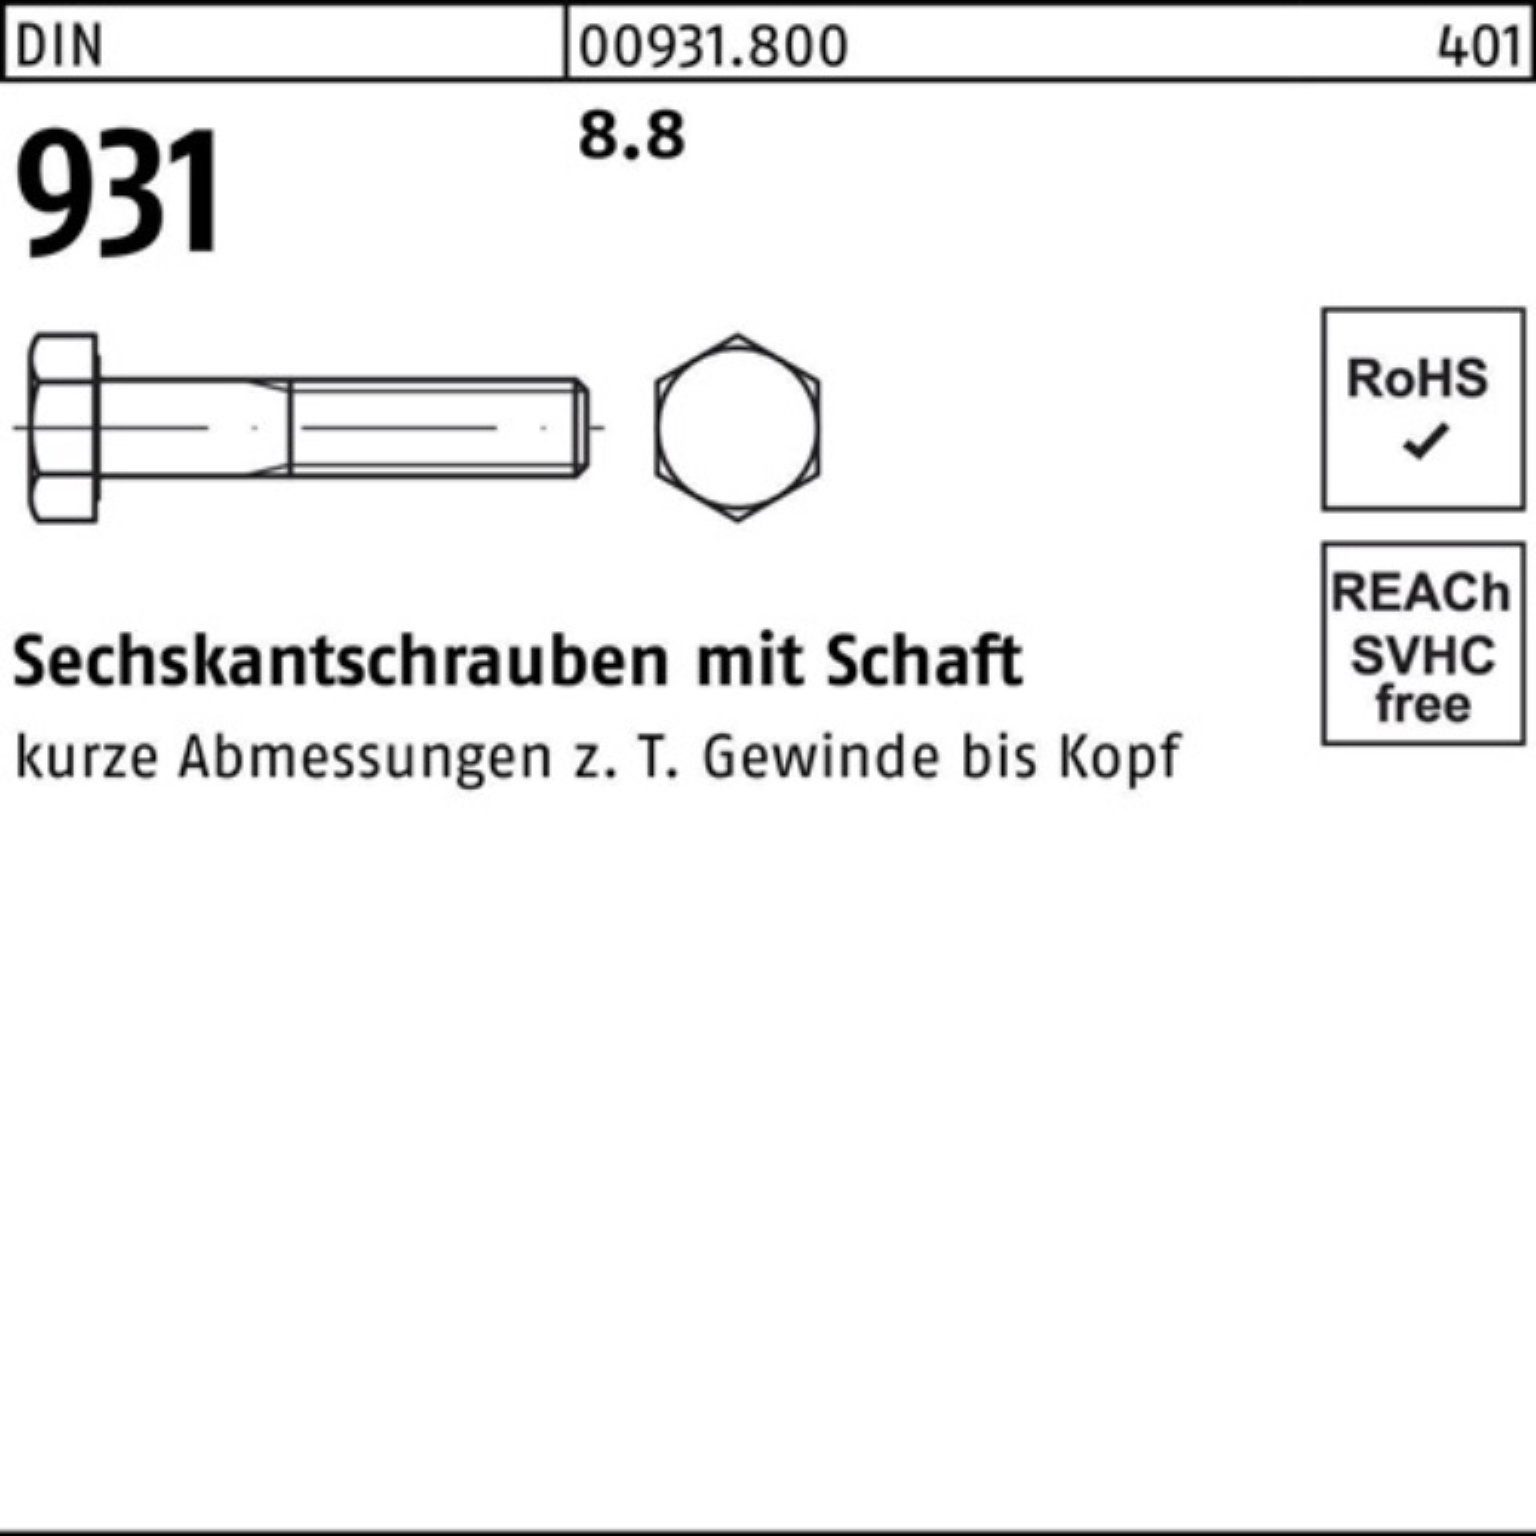 Super günstig AUS Reyher Sechskantschraube 8.8 M36x Sechskantschraube Schaft Pack 1 270 100er DIN Stück 931 DIN